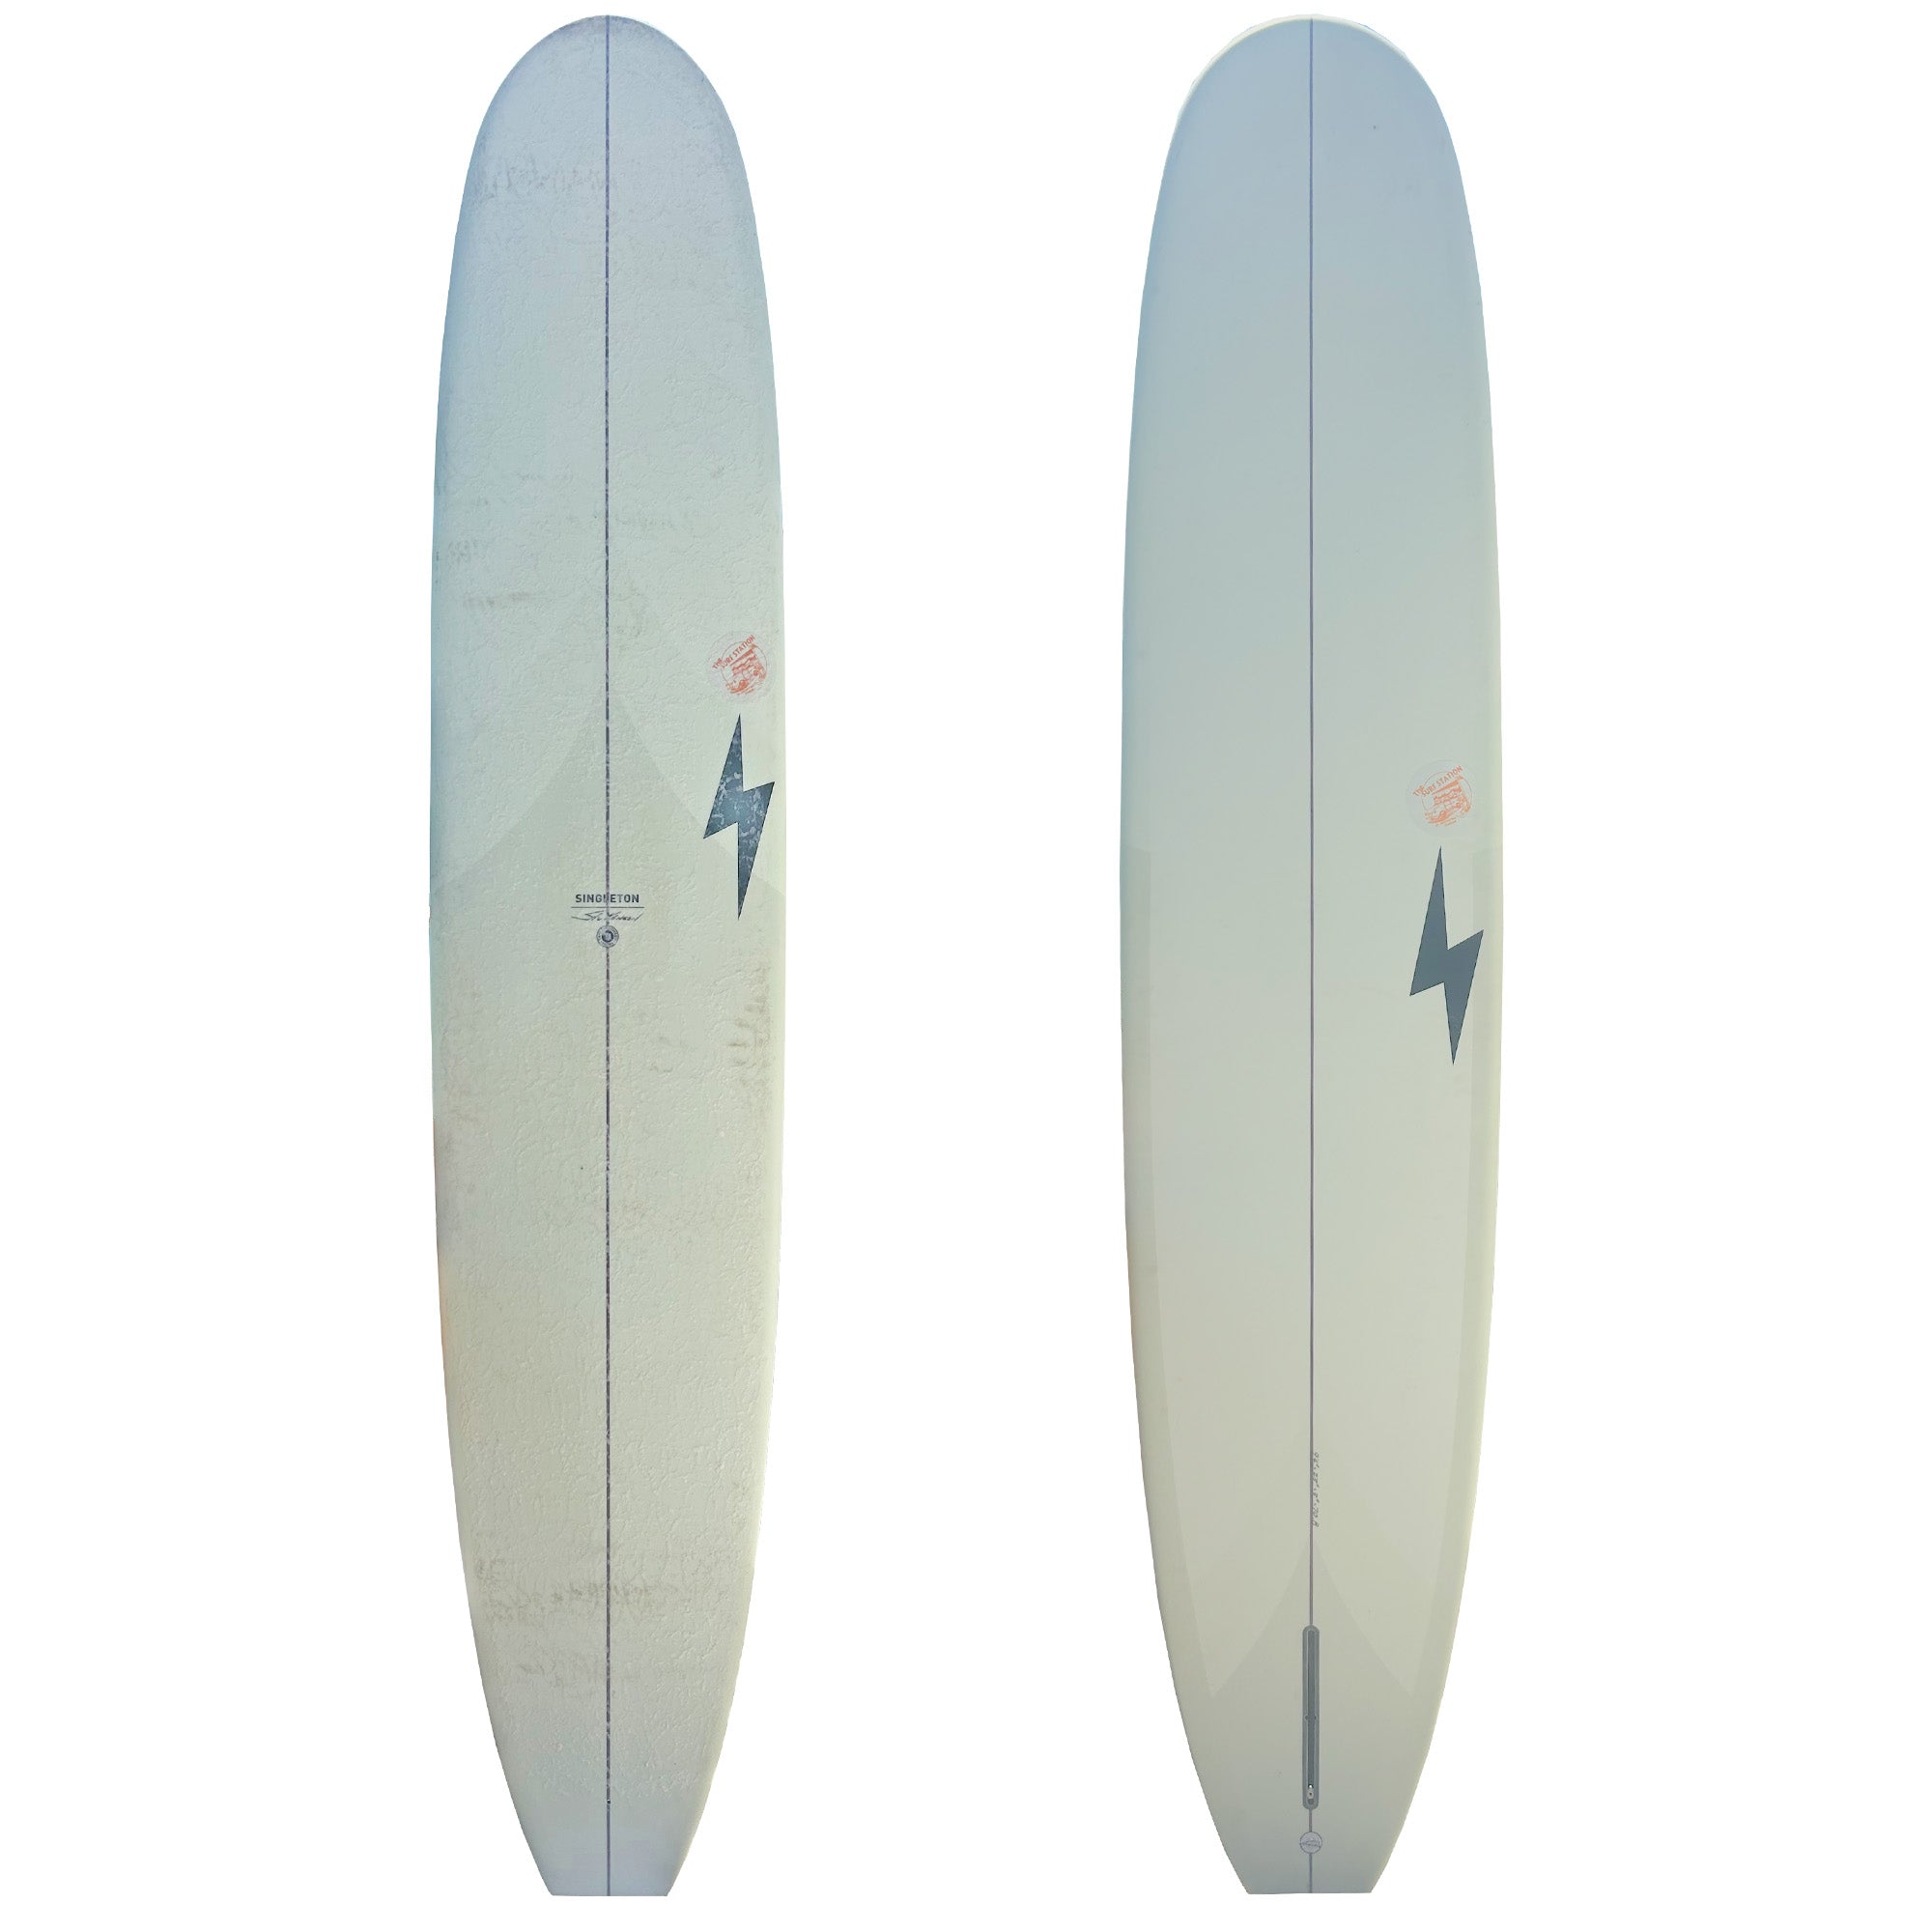 Firewire Taylor Jensen Thunderbolt Silver 9'4 Consignment Surfboard